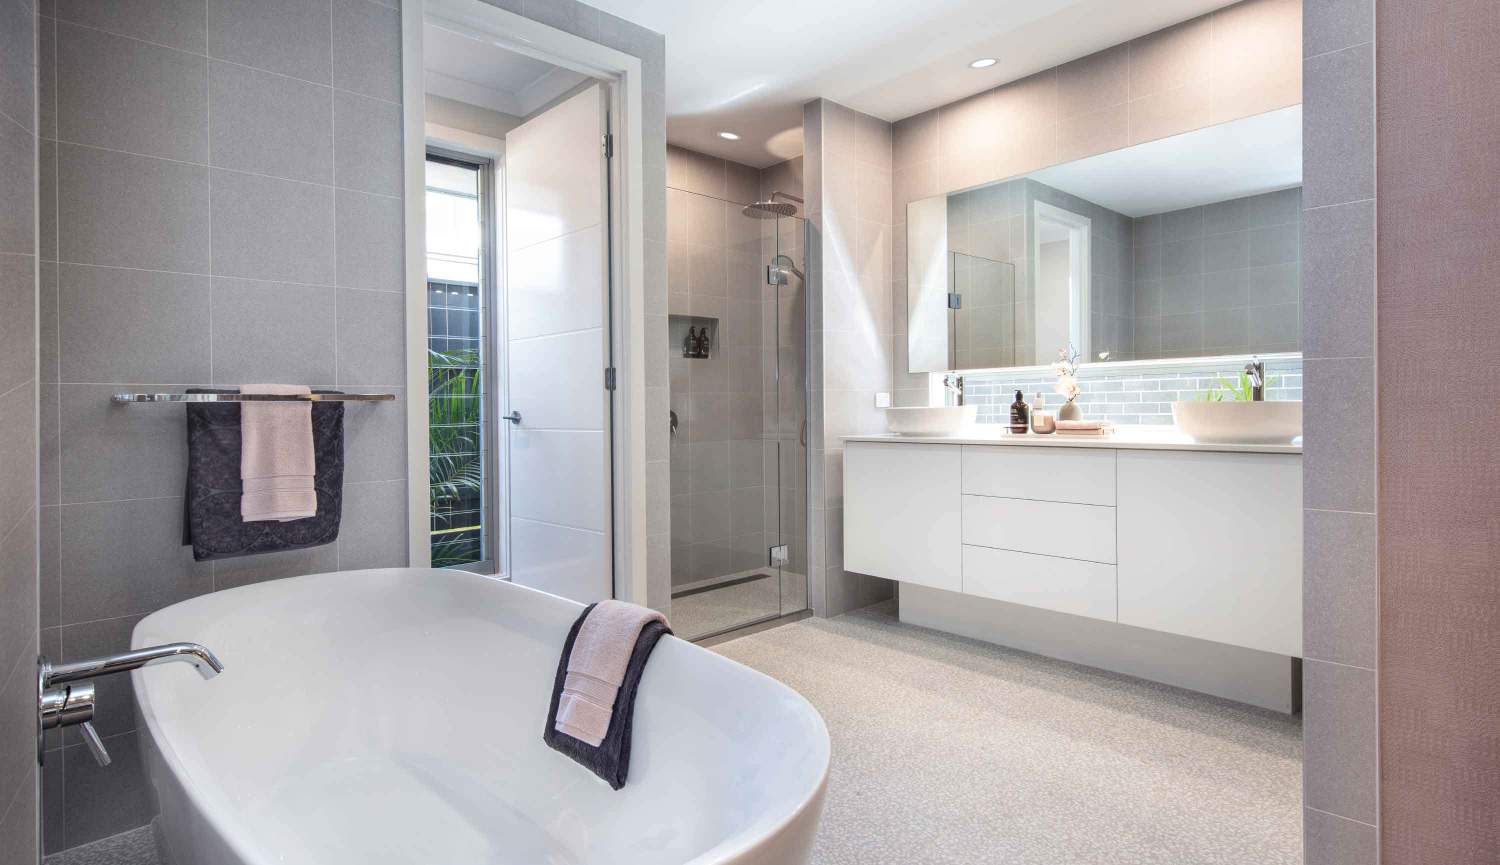 Adina Single Storey House Design Bathroom